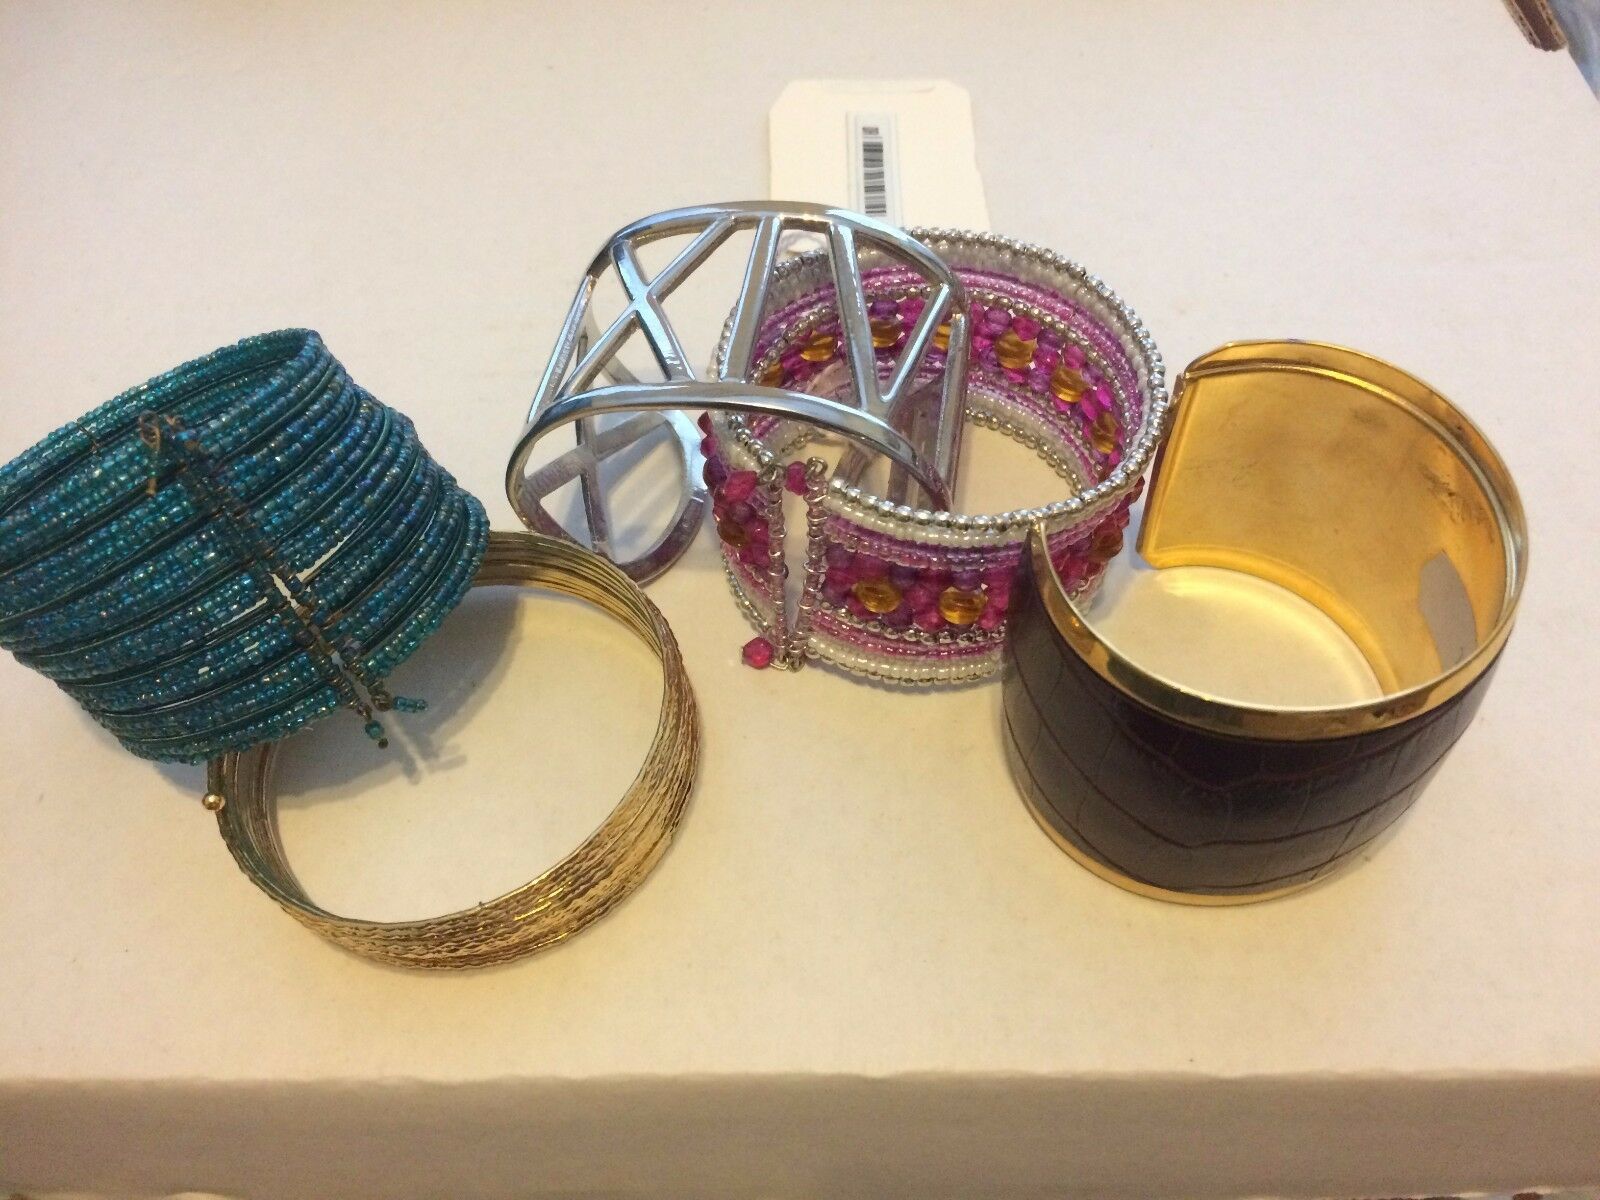 10 Piece Wholesale Fashion Jewelry Lots - Assorted Cuff Bracelets